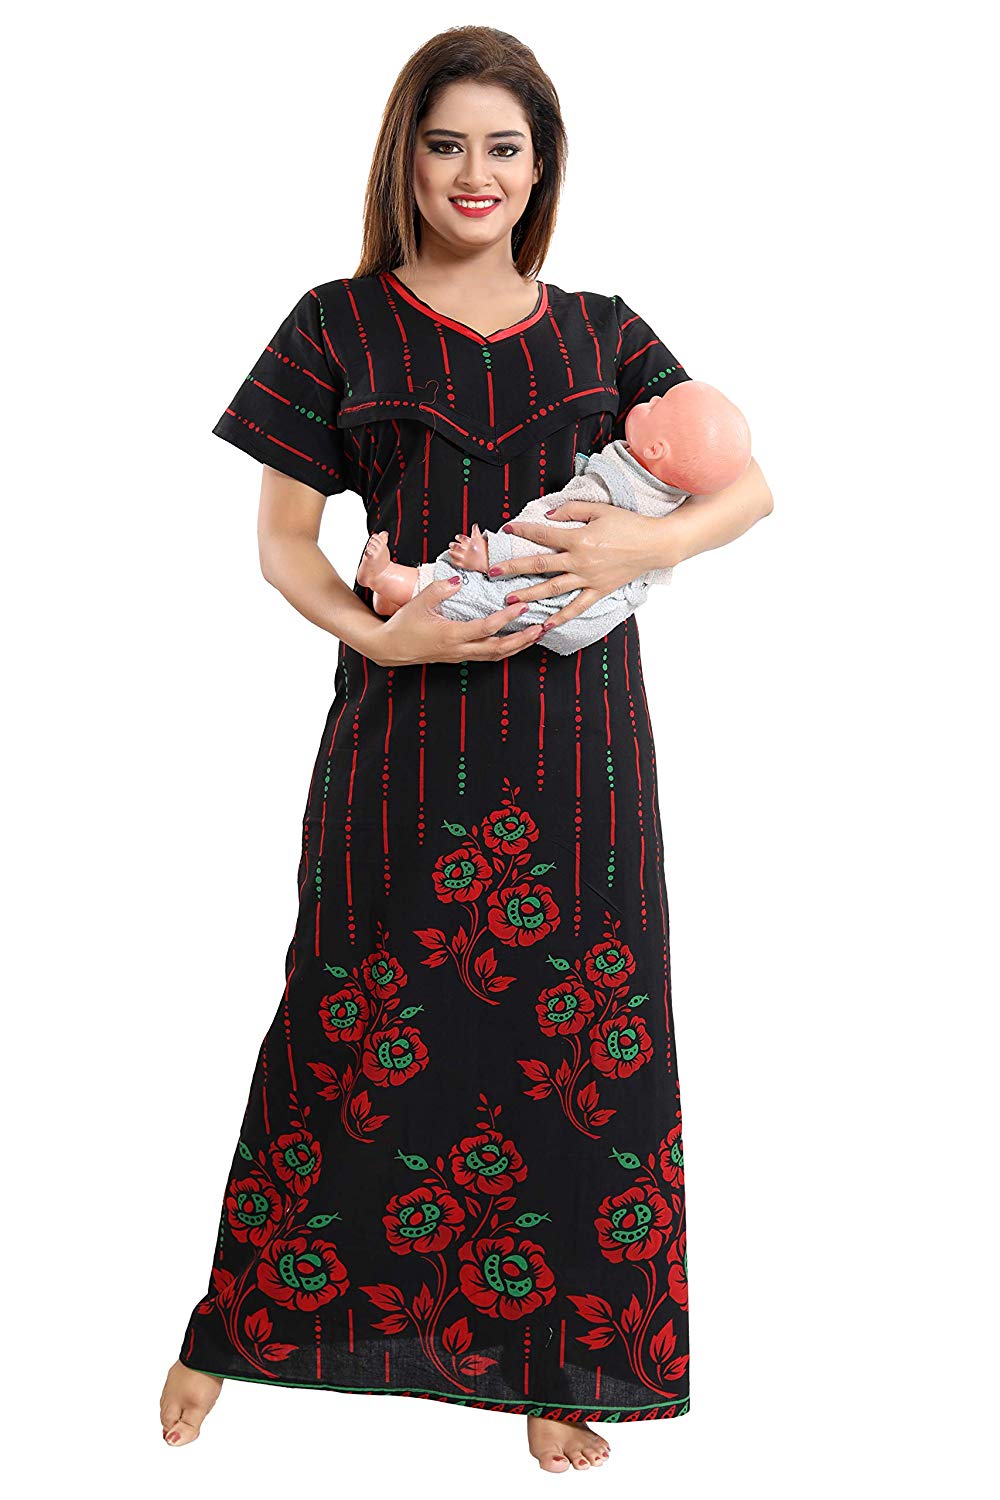 Red Shirt Pattern Cotton Maternity and Feeding Dress